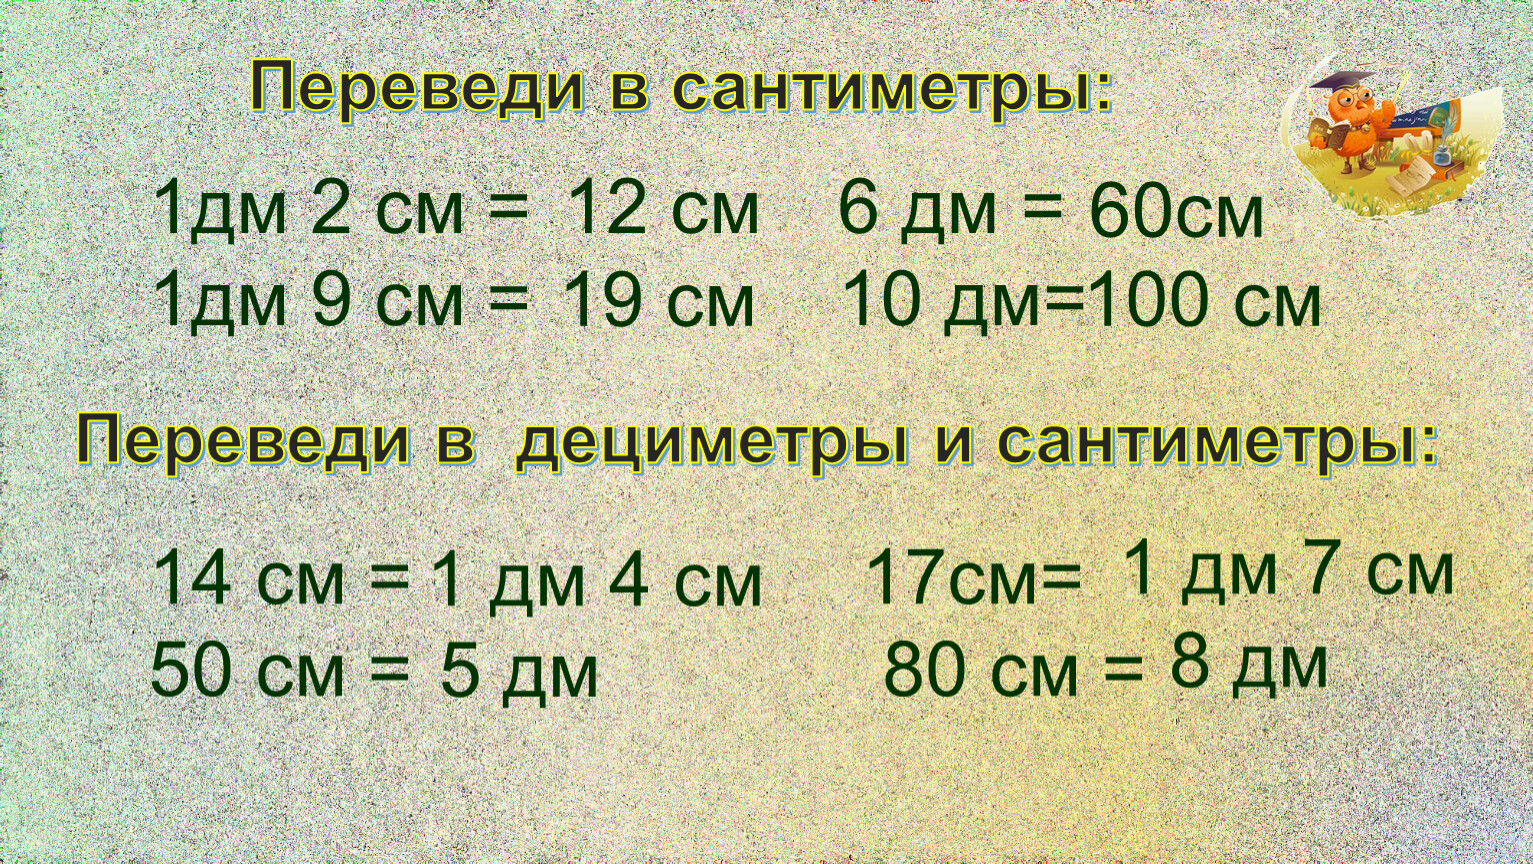 периметр стола 24 дециметра длина 8 дециметров